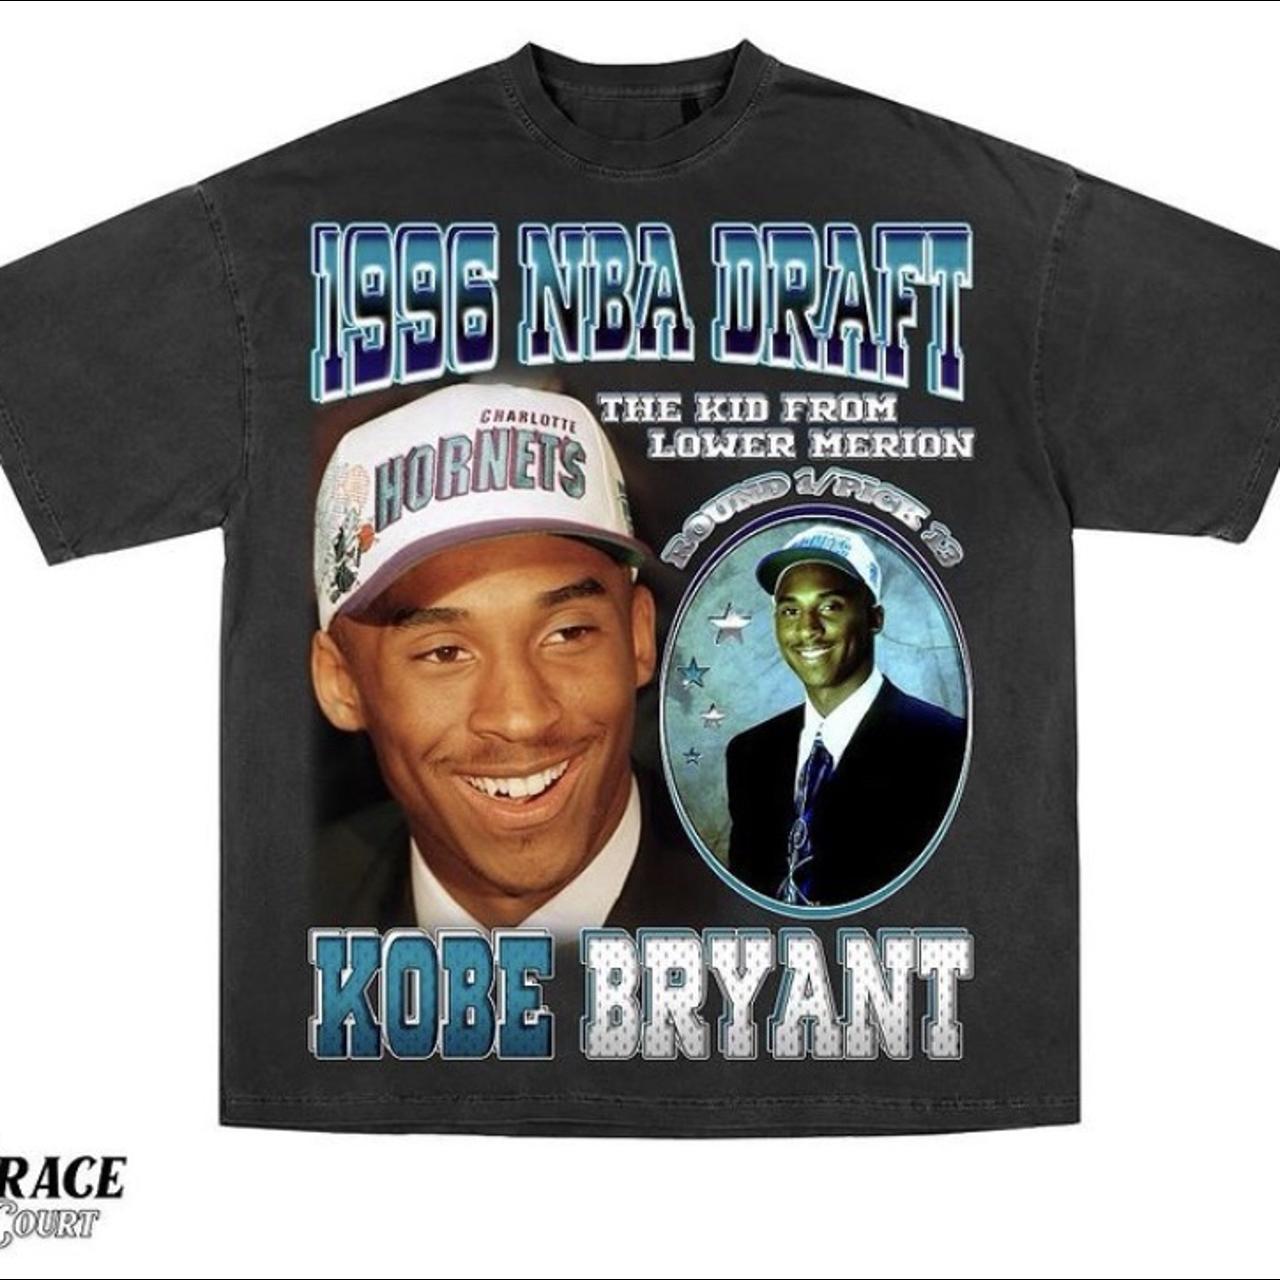 1996 Draft - Kobe Bryant 